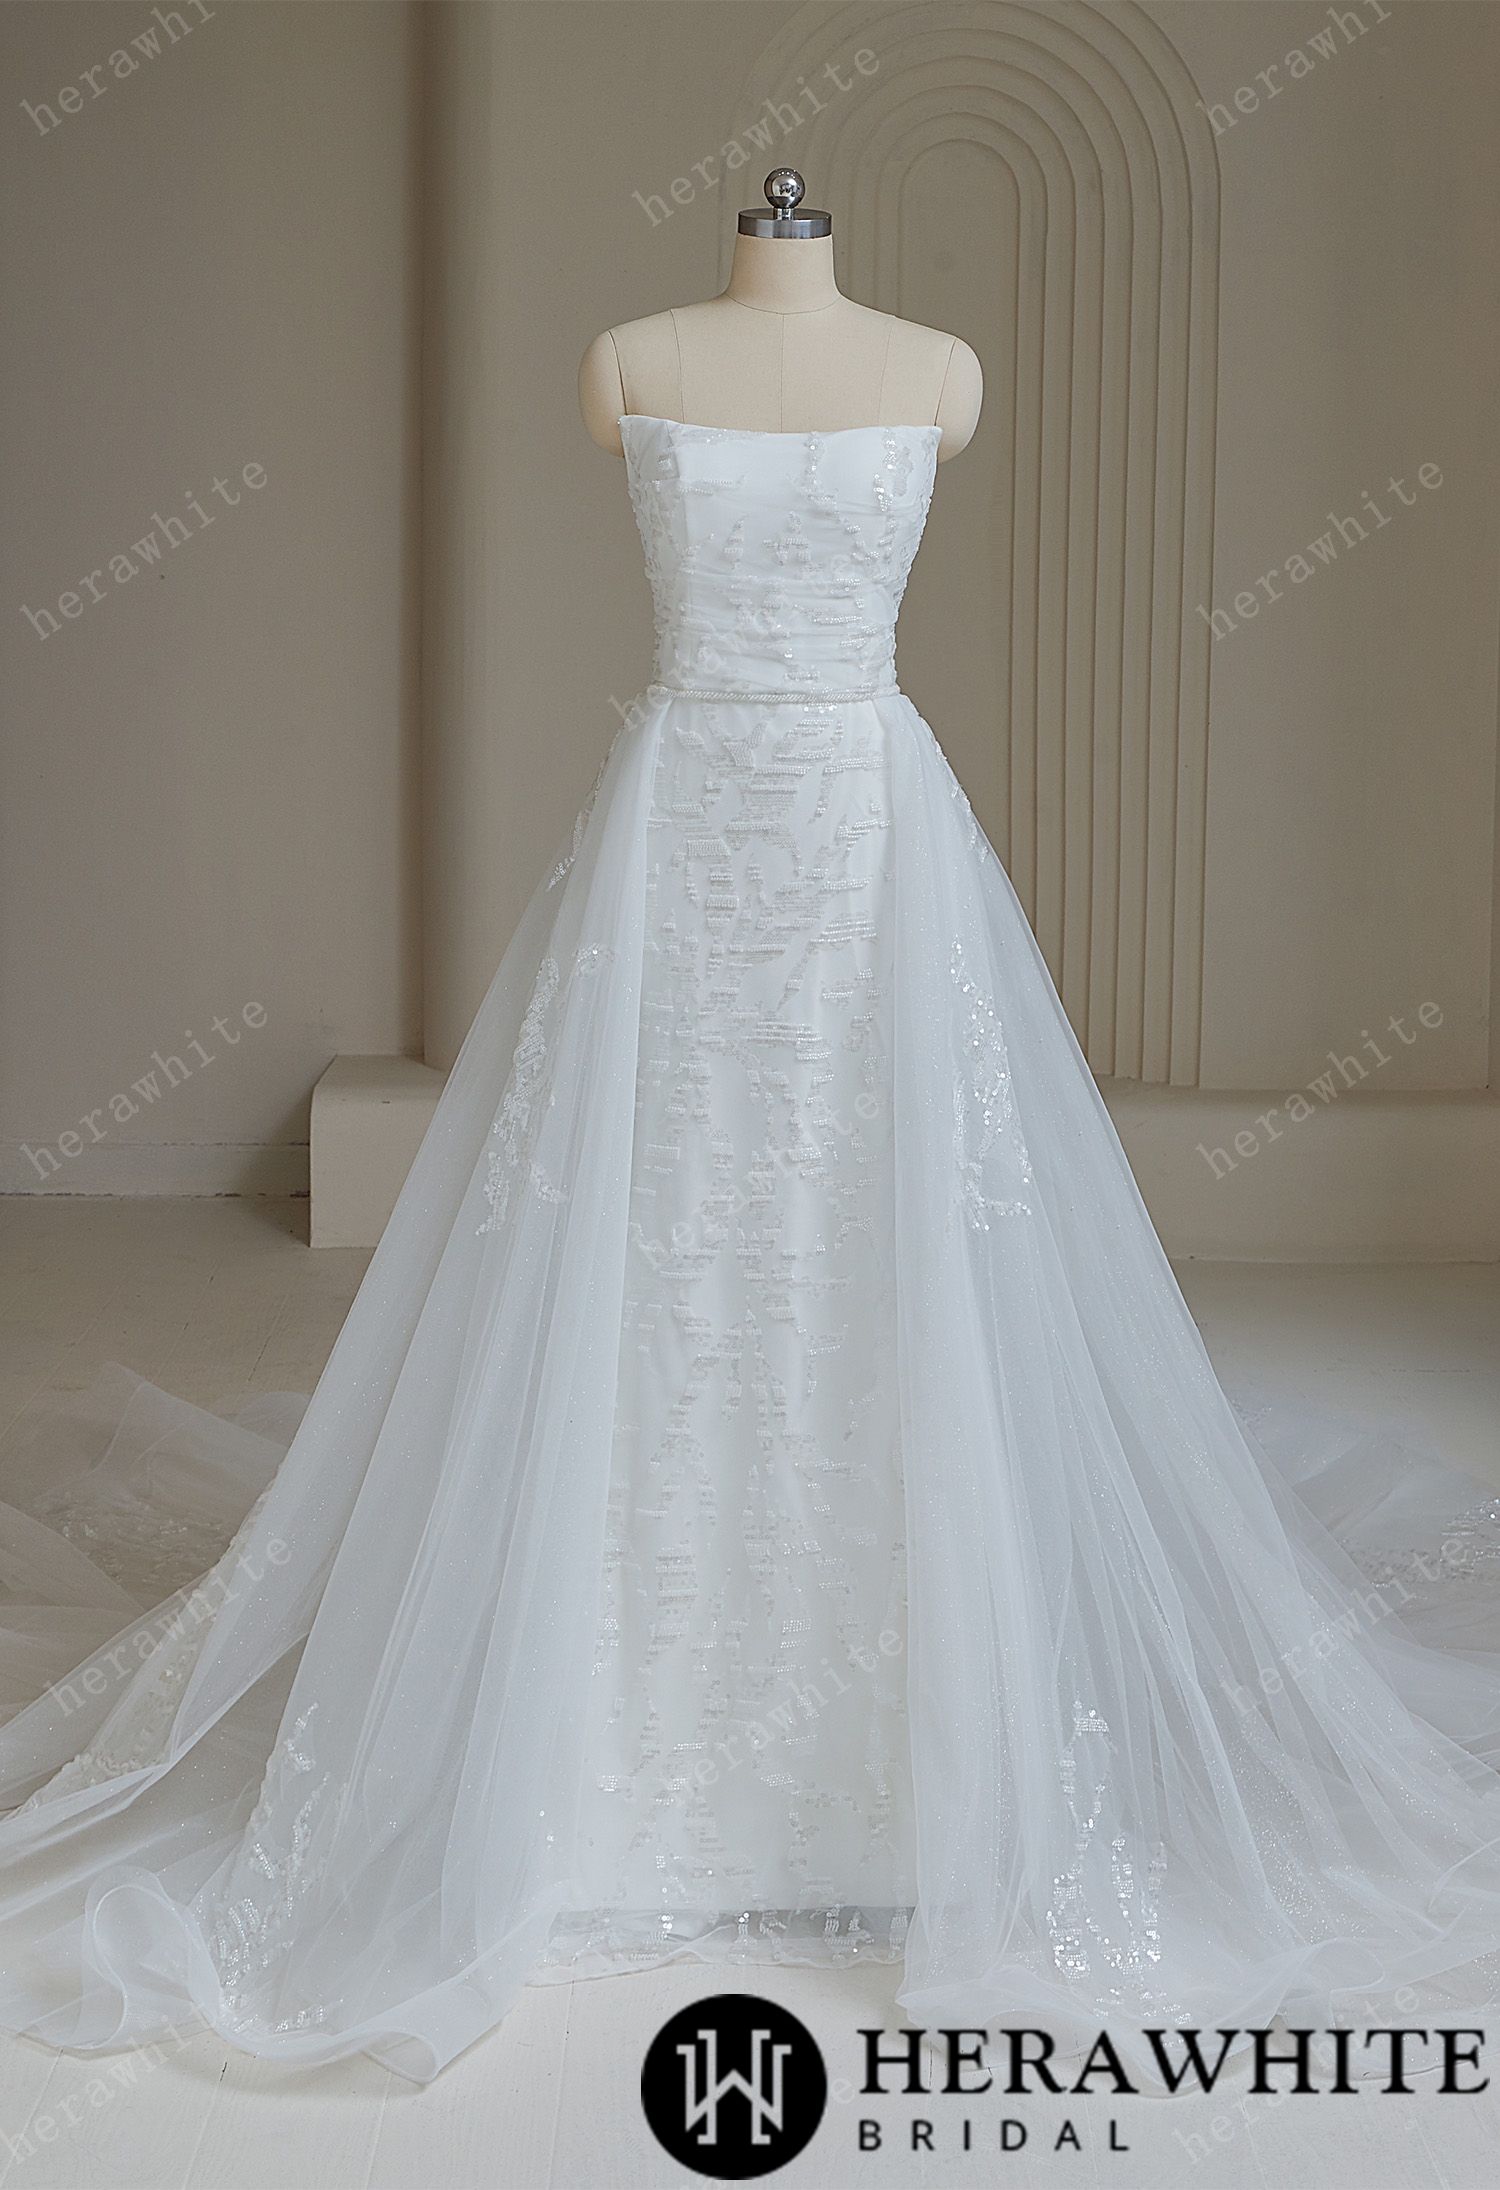 Elegant Sequined Wedding Dress With Detachable Train